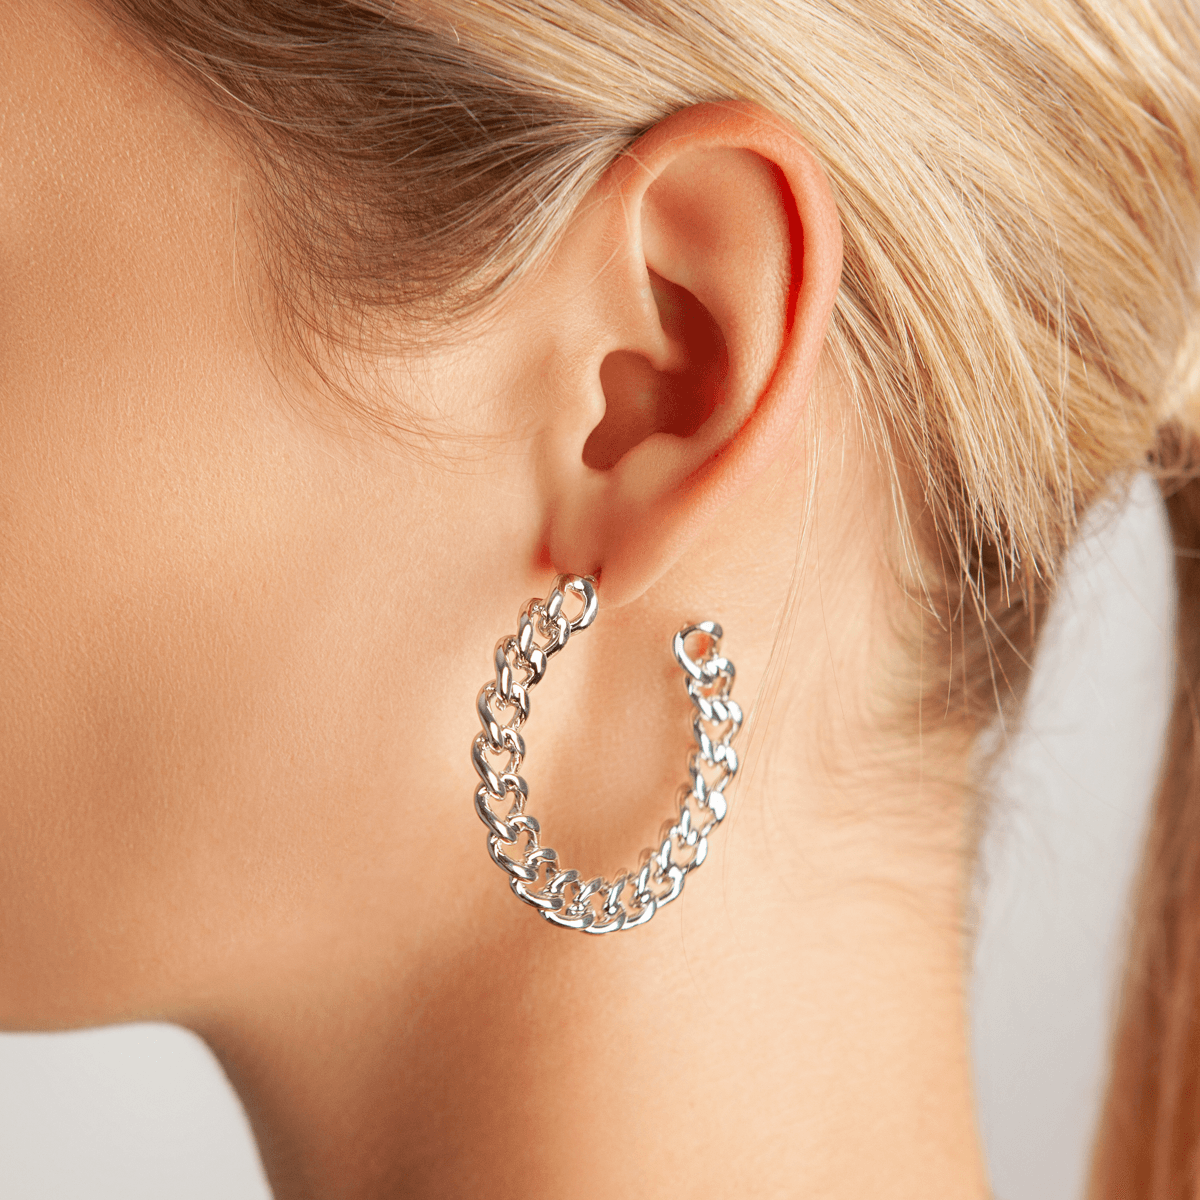 Model wearing Eternal Narrow Curb Chain Hoop Earrings in Silver